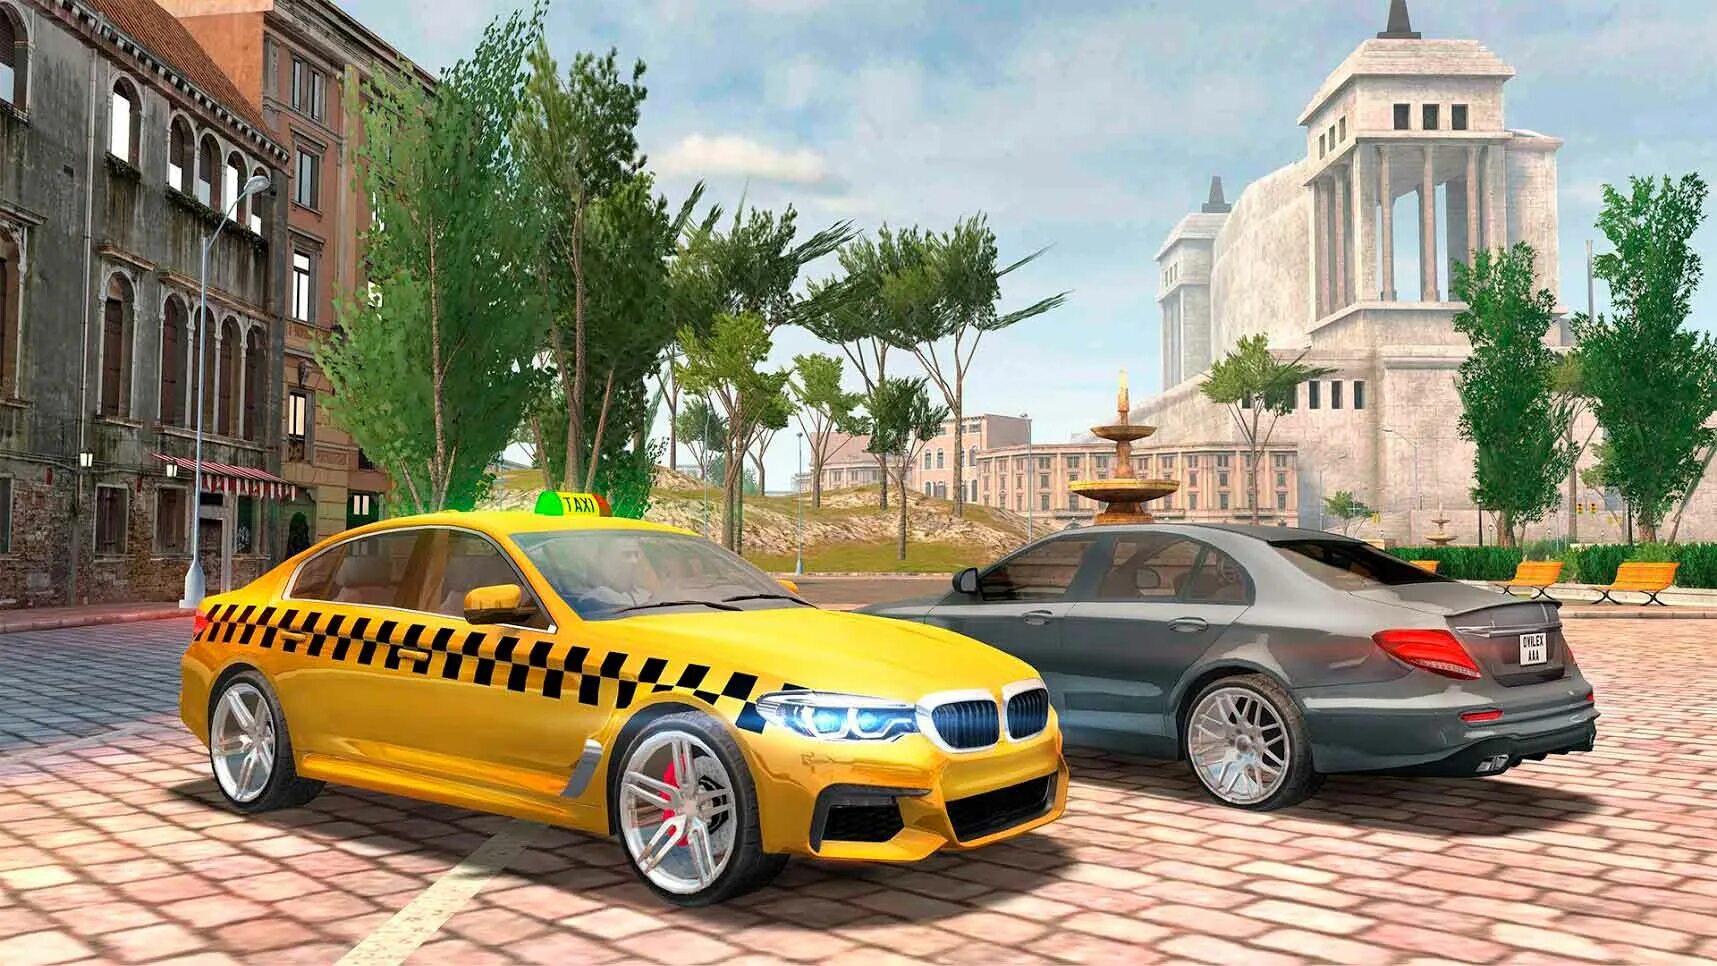 Taxi SIM 2022 Evolution. Taxi Simulator 2020. Симулятор таксиста 2020. Андроид Taxi SIM 2020. Телефон такси игры